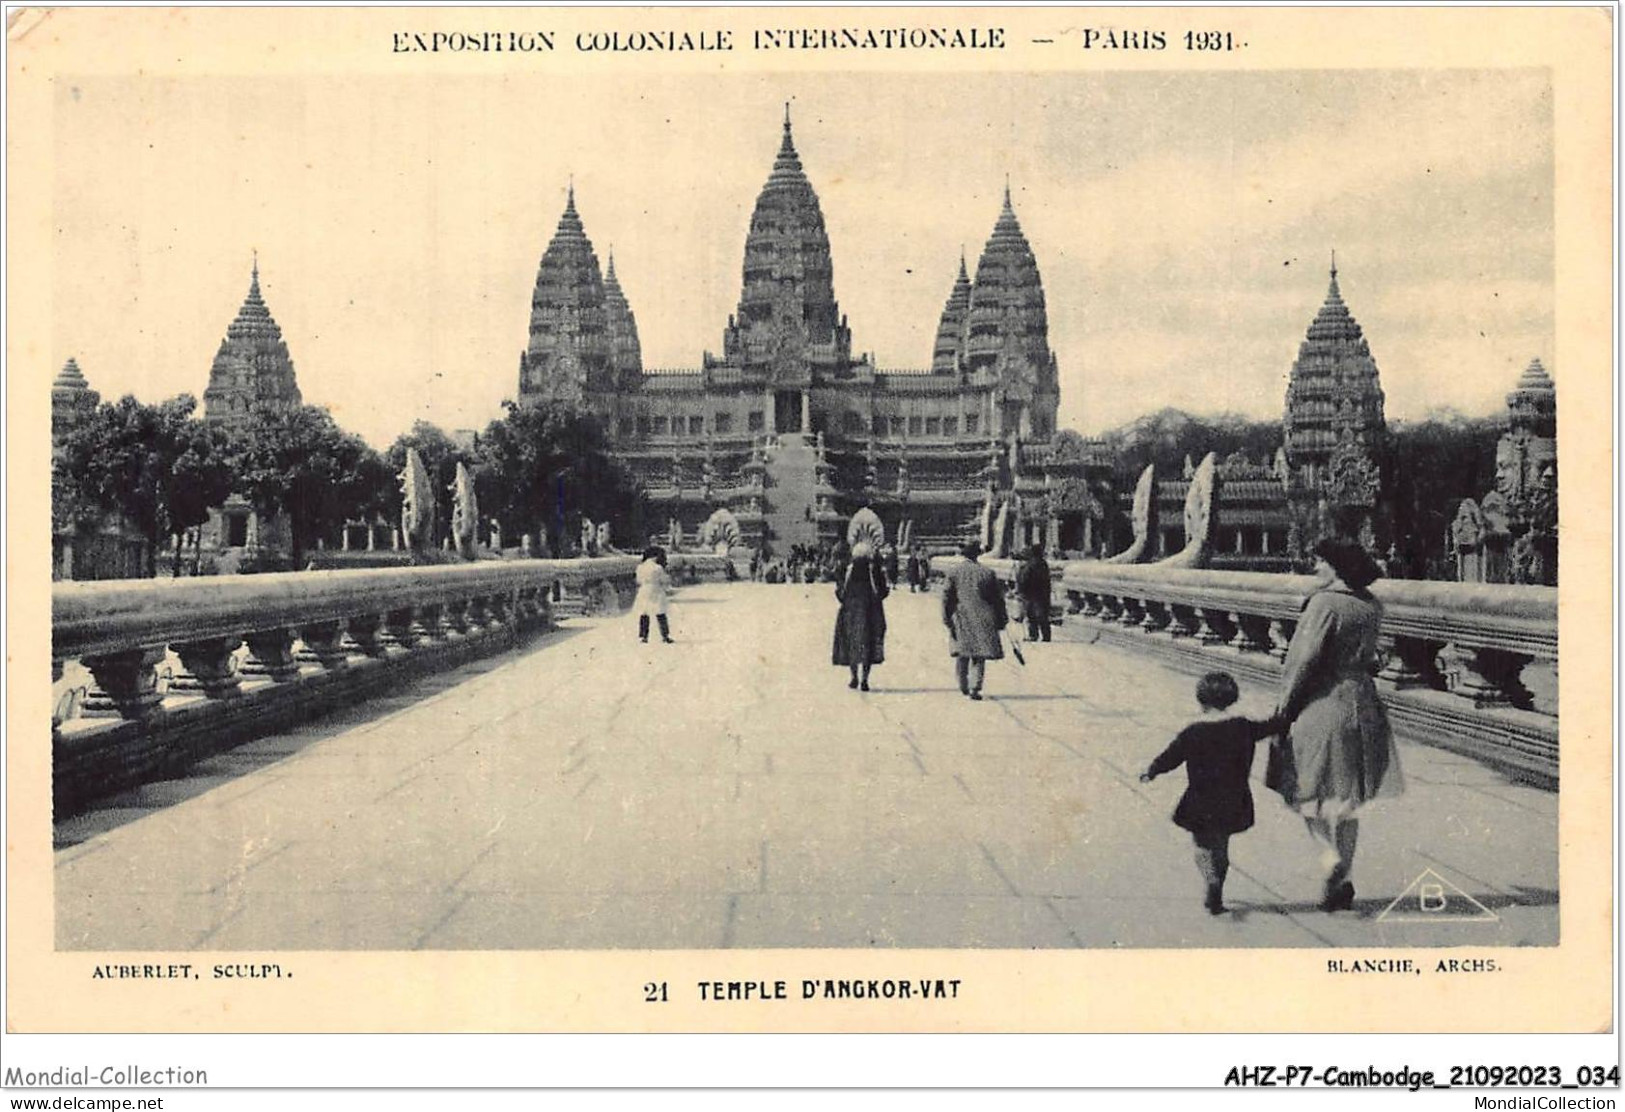 AHZP7-CAMBODGE-0613 - EXPOSITION COLONIALE INTERNATIONALE - PARIS 1931 - TEMPLE D'ANGKOR-VAT - Cambodge